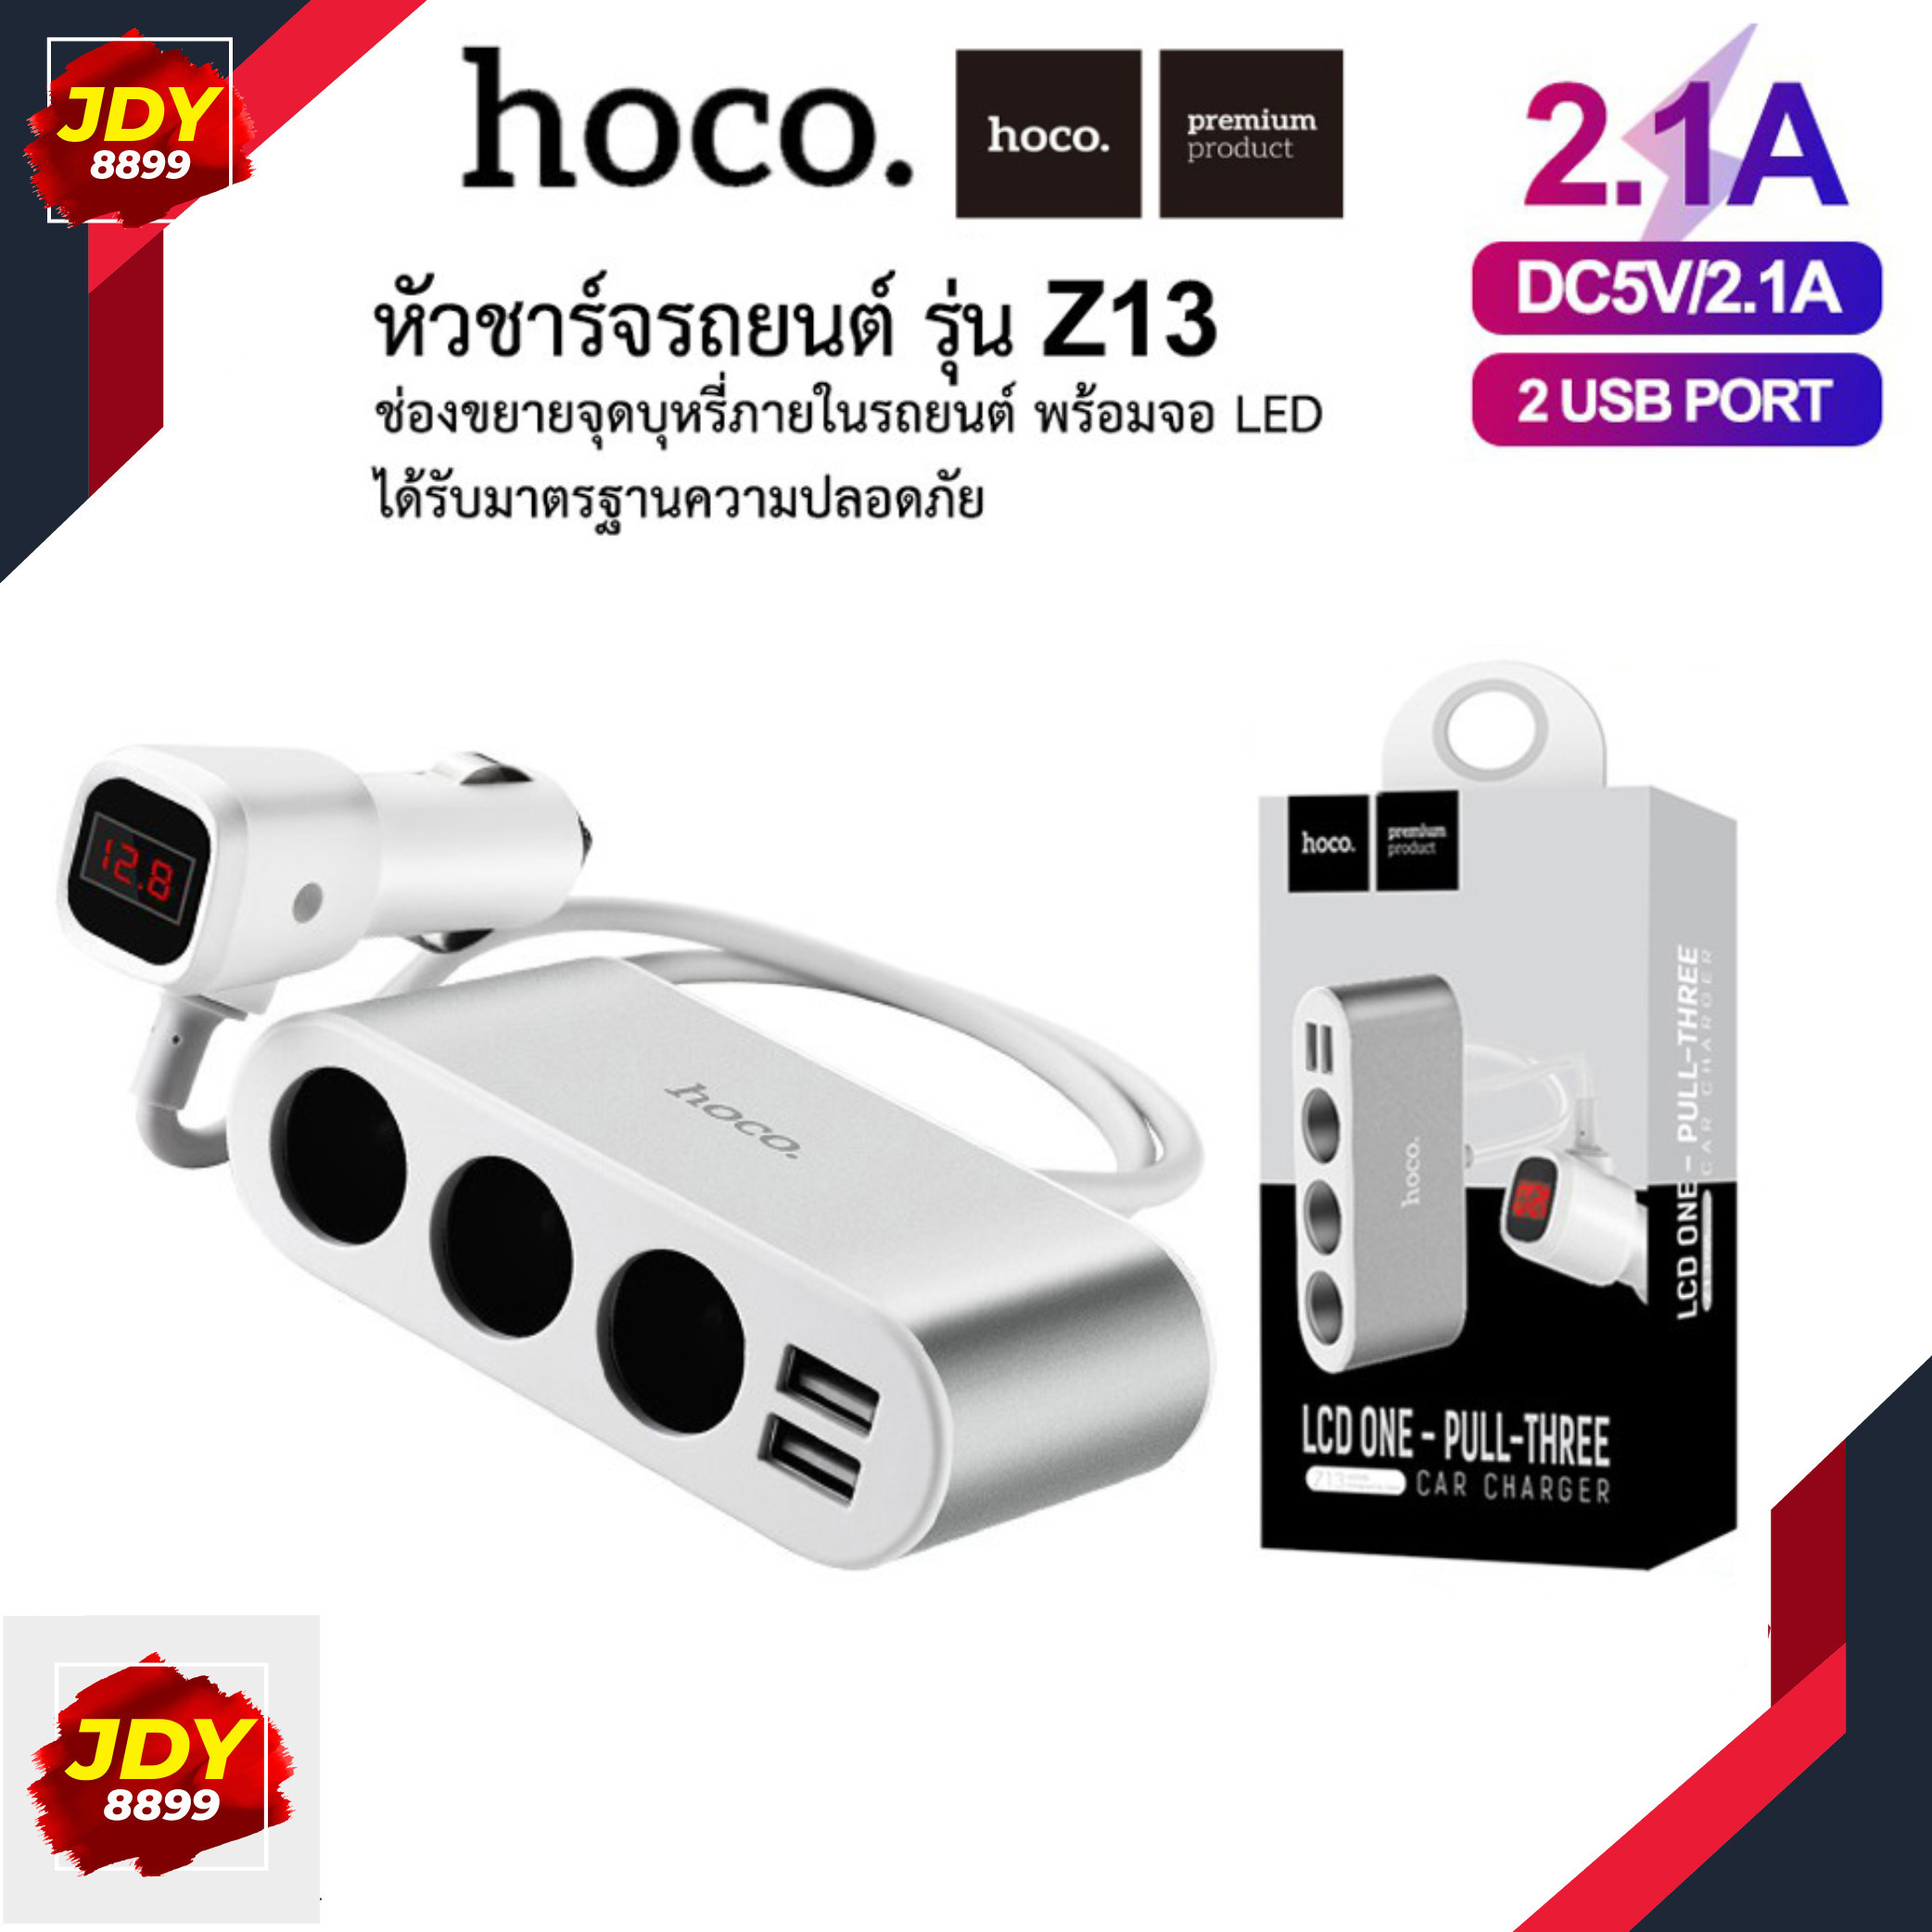 Hoco Z13 Adapter หัวชาร์จในรถยนต์แบบ 2 USB 3 ช่องเสียบ 12V Output 2.4A ยาว 55 cm JDY8899